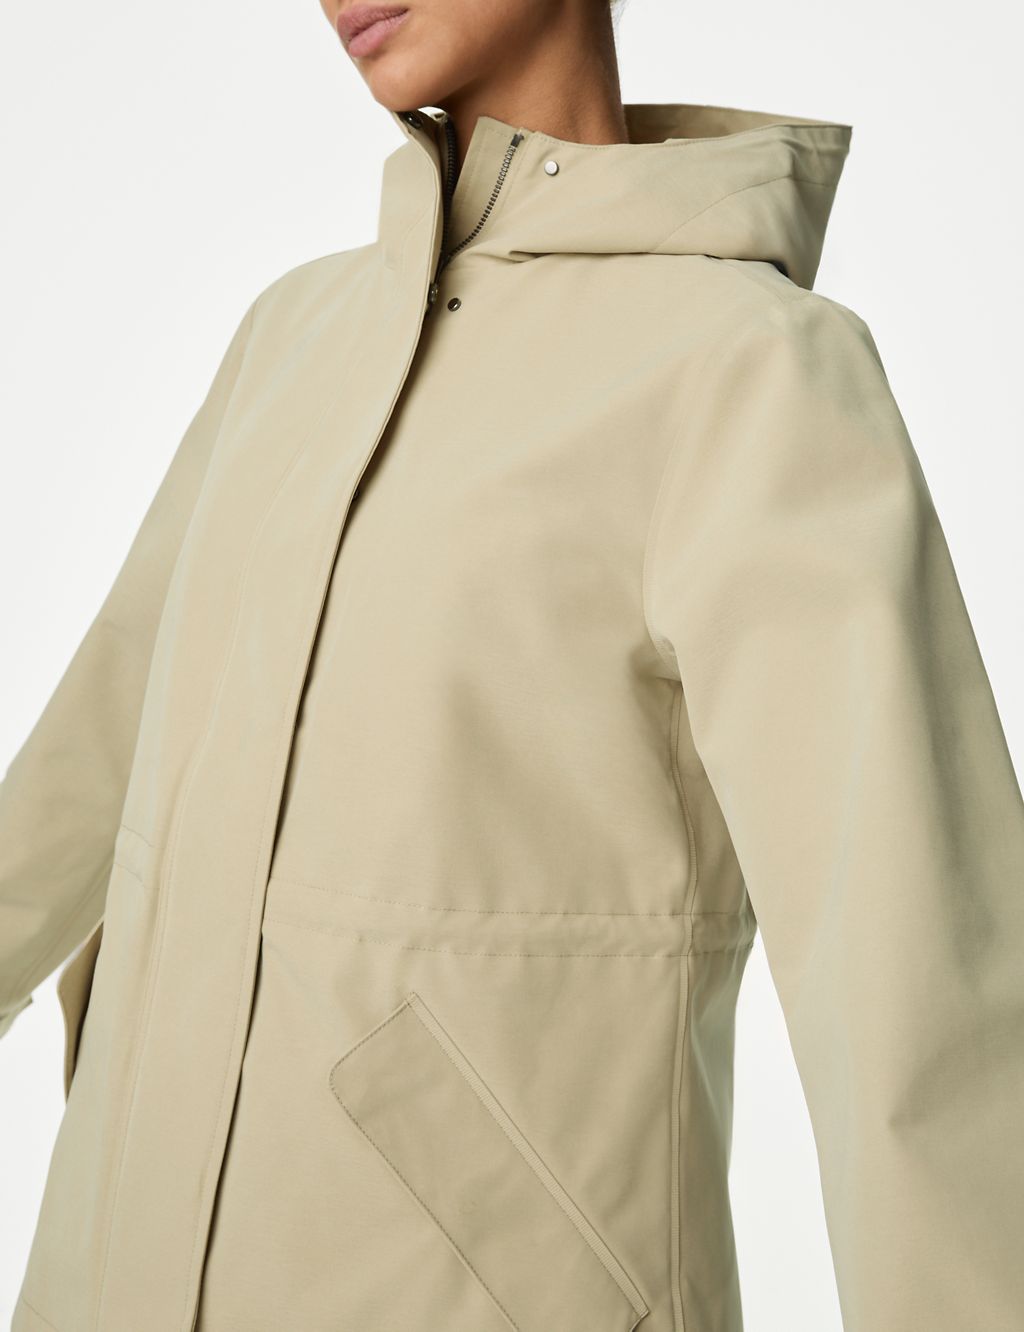 Stormwear™ Hooded Rain Jacket with Cotton 6 of 7